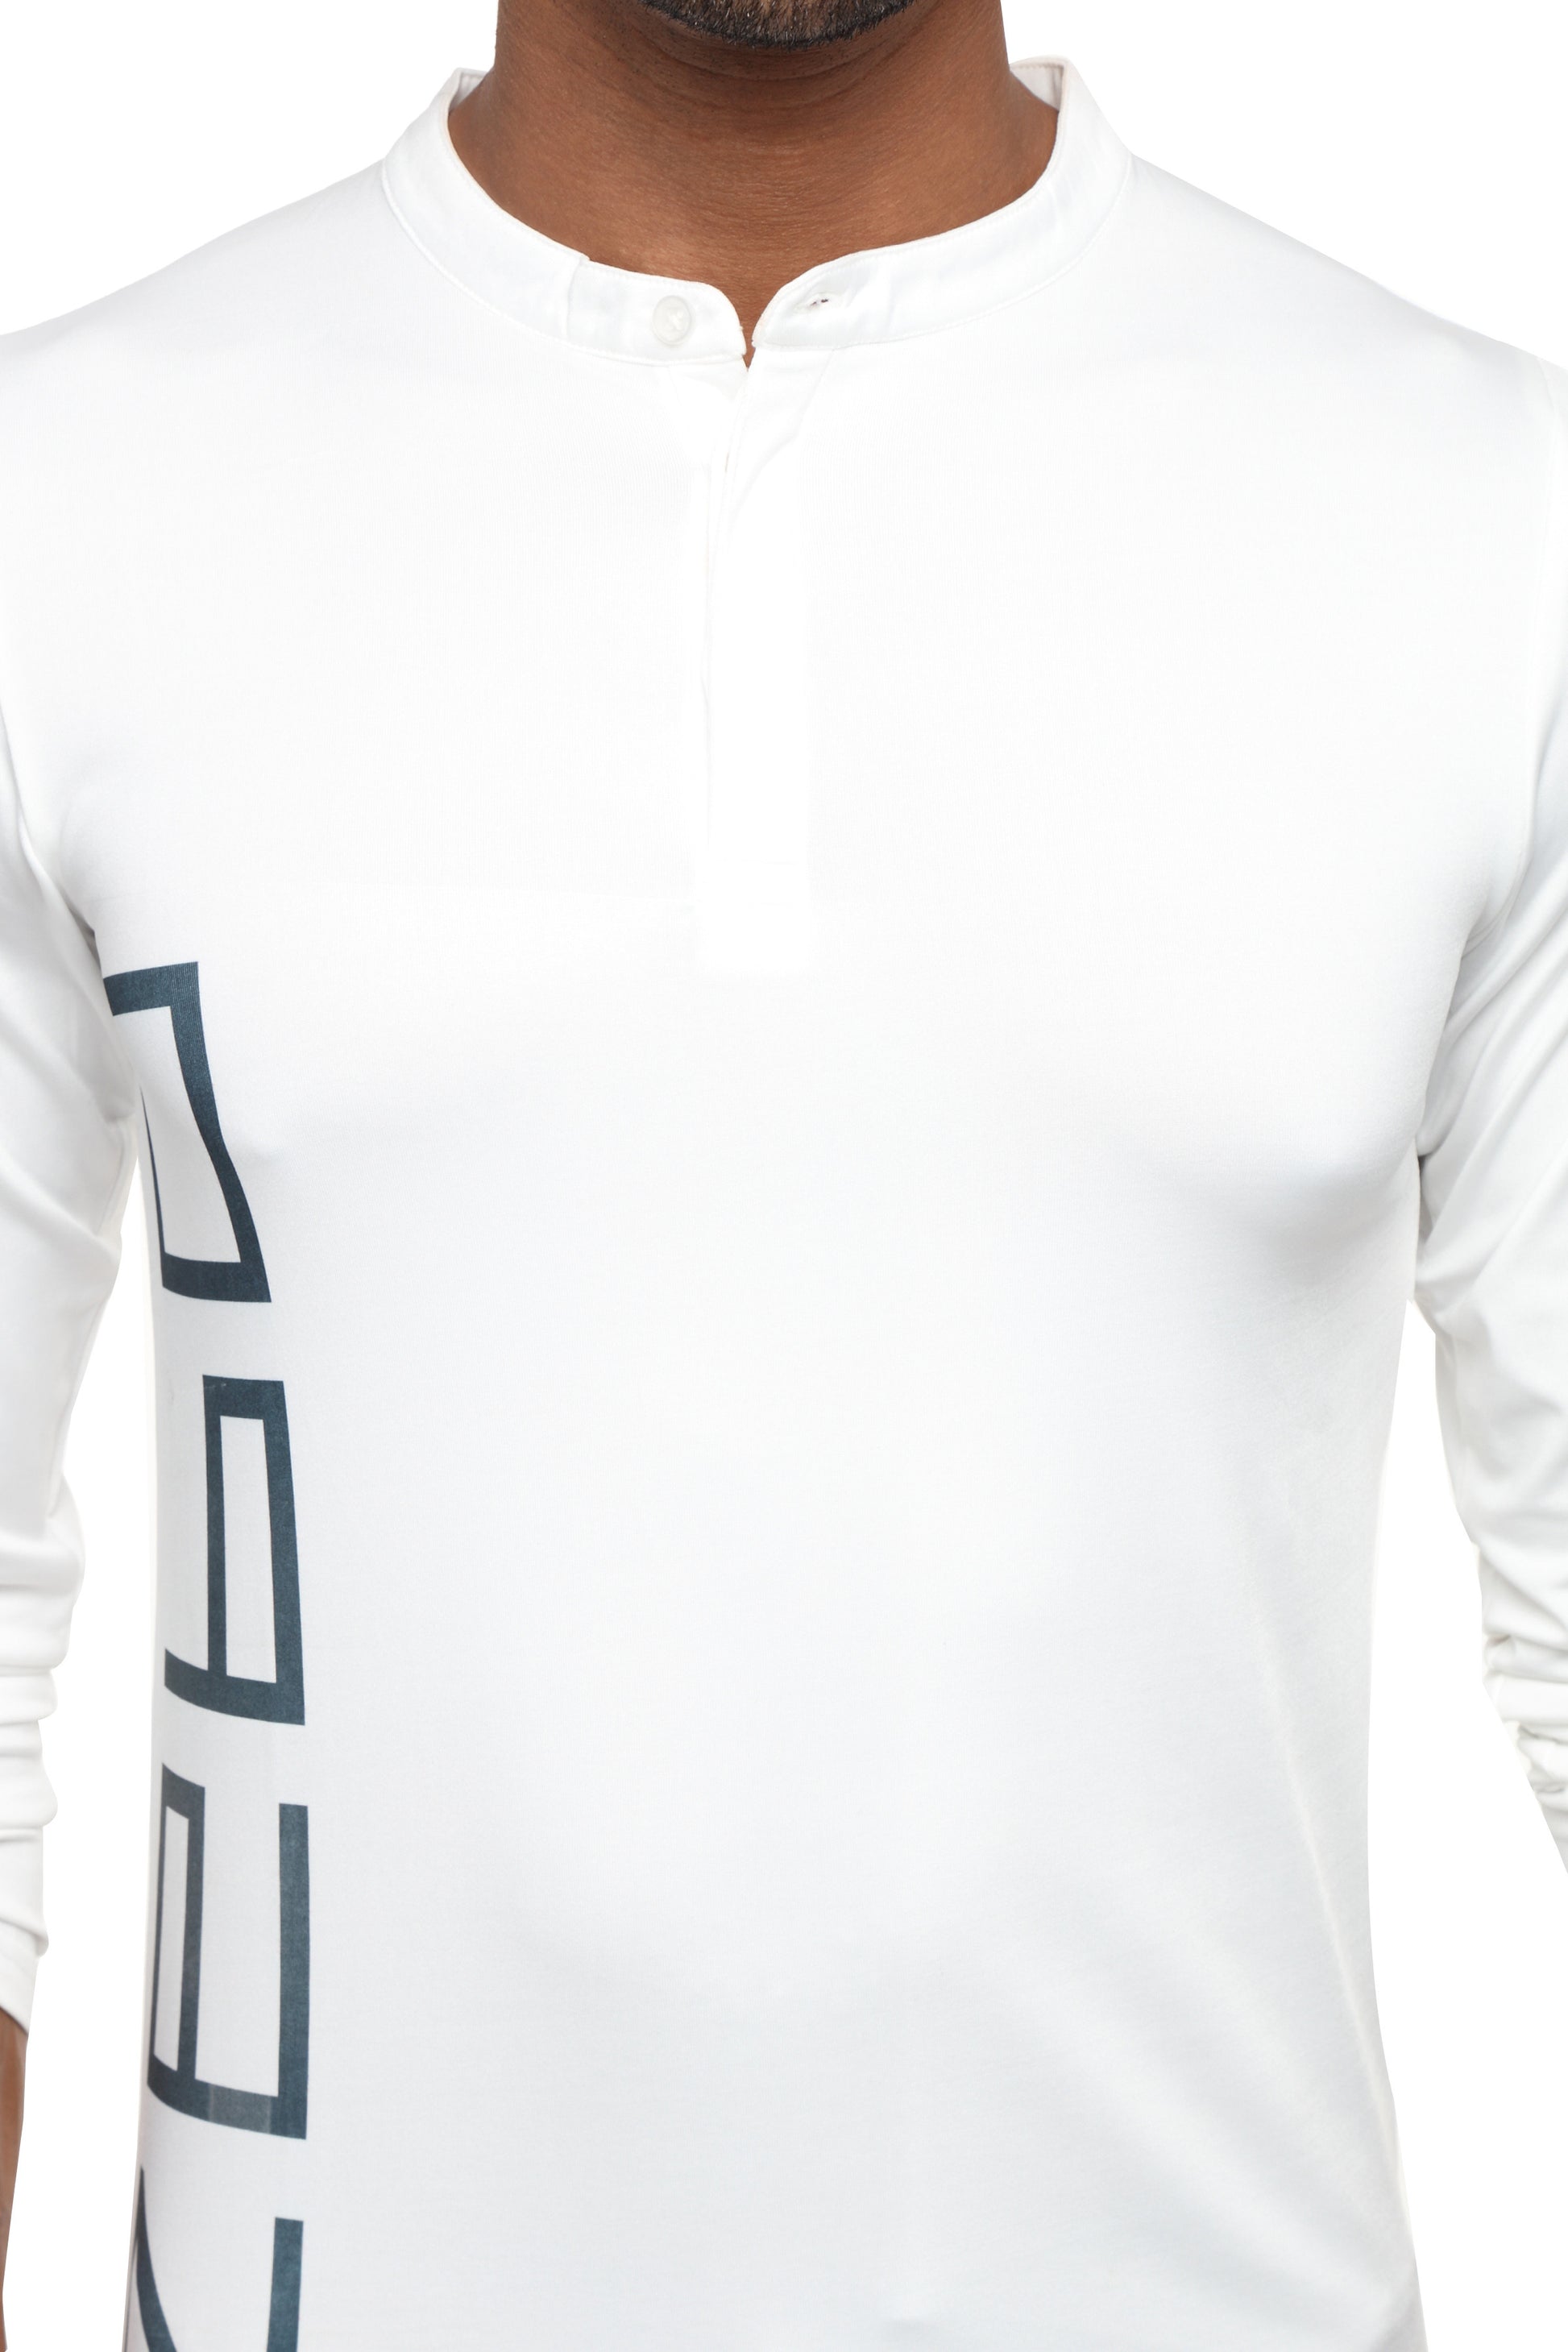 PERFORMA+ Blancos full sleeve Henley - Zebo Active Wear